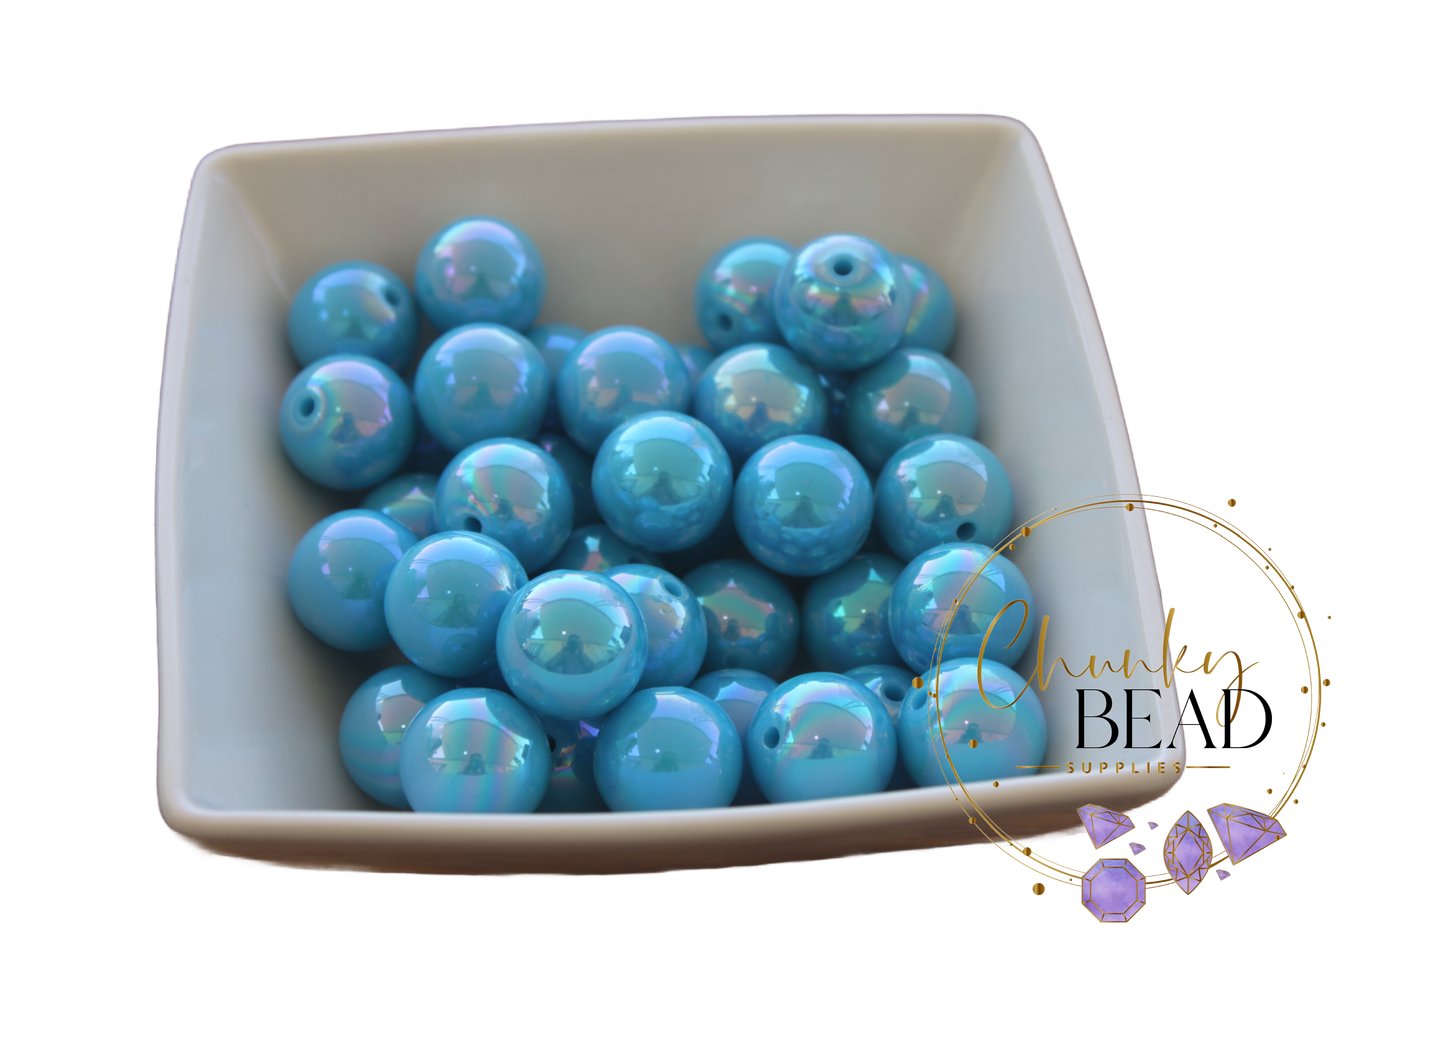 20mm “Aqua Blue” AB Solid Shiny Bubblegum Acrylic Beads